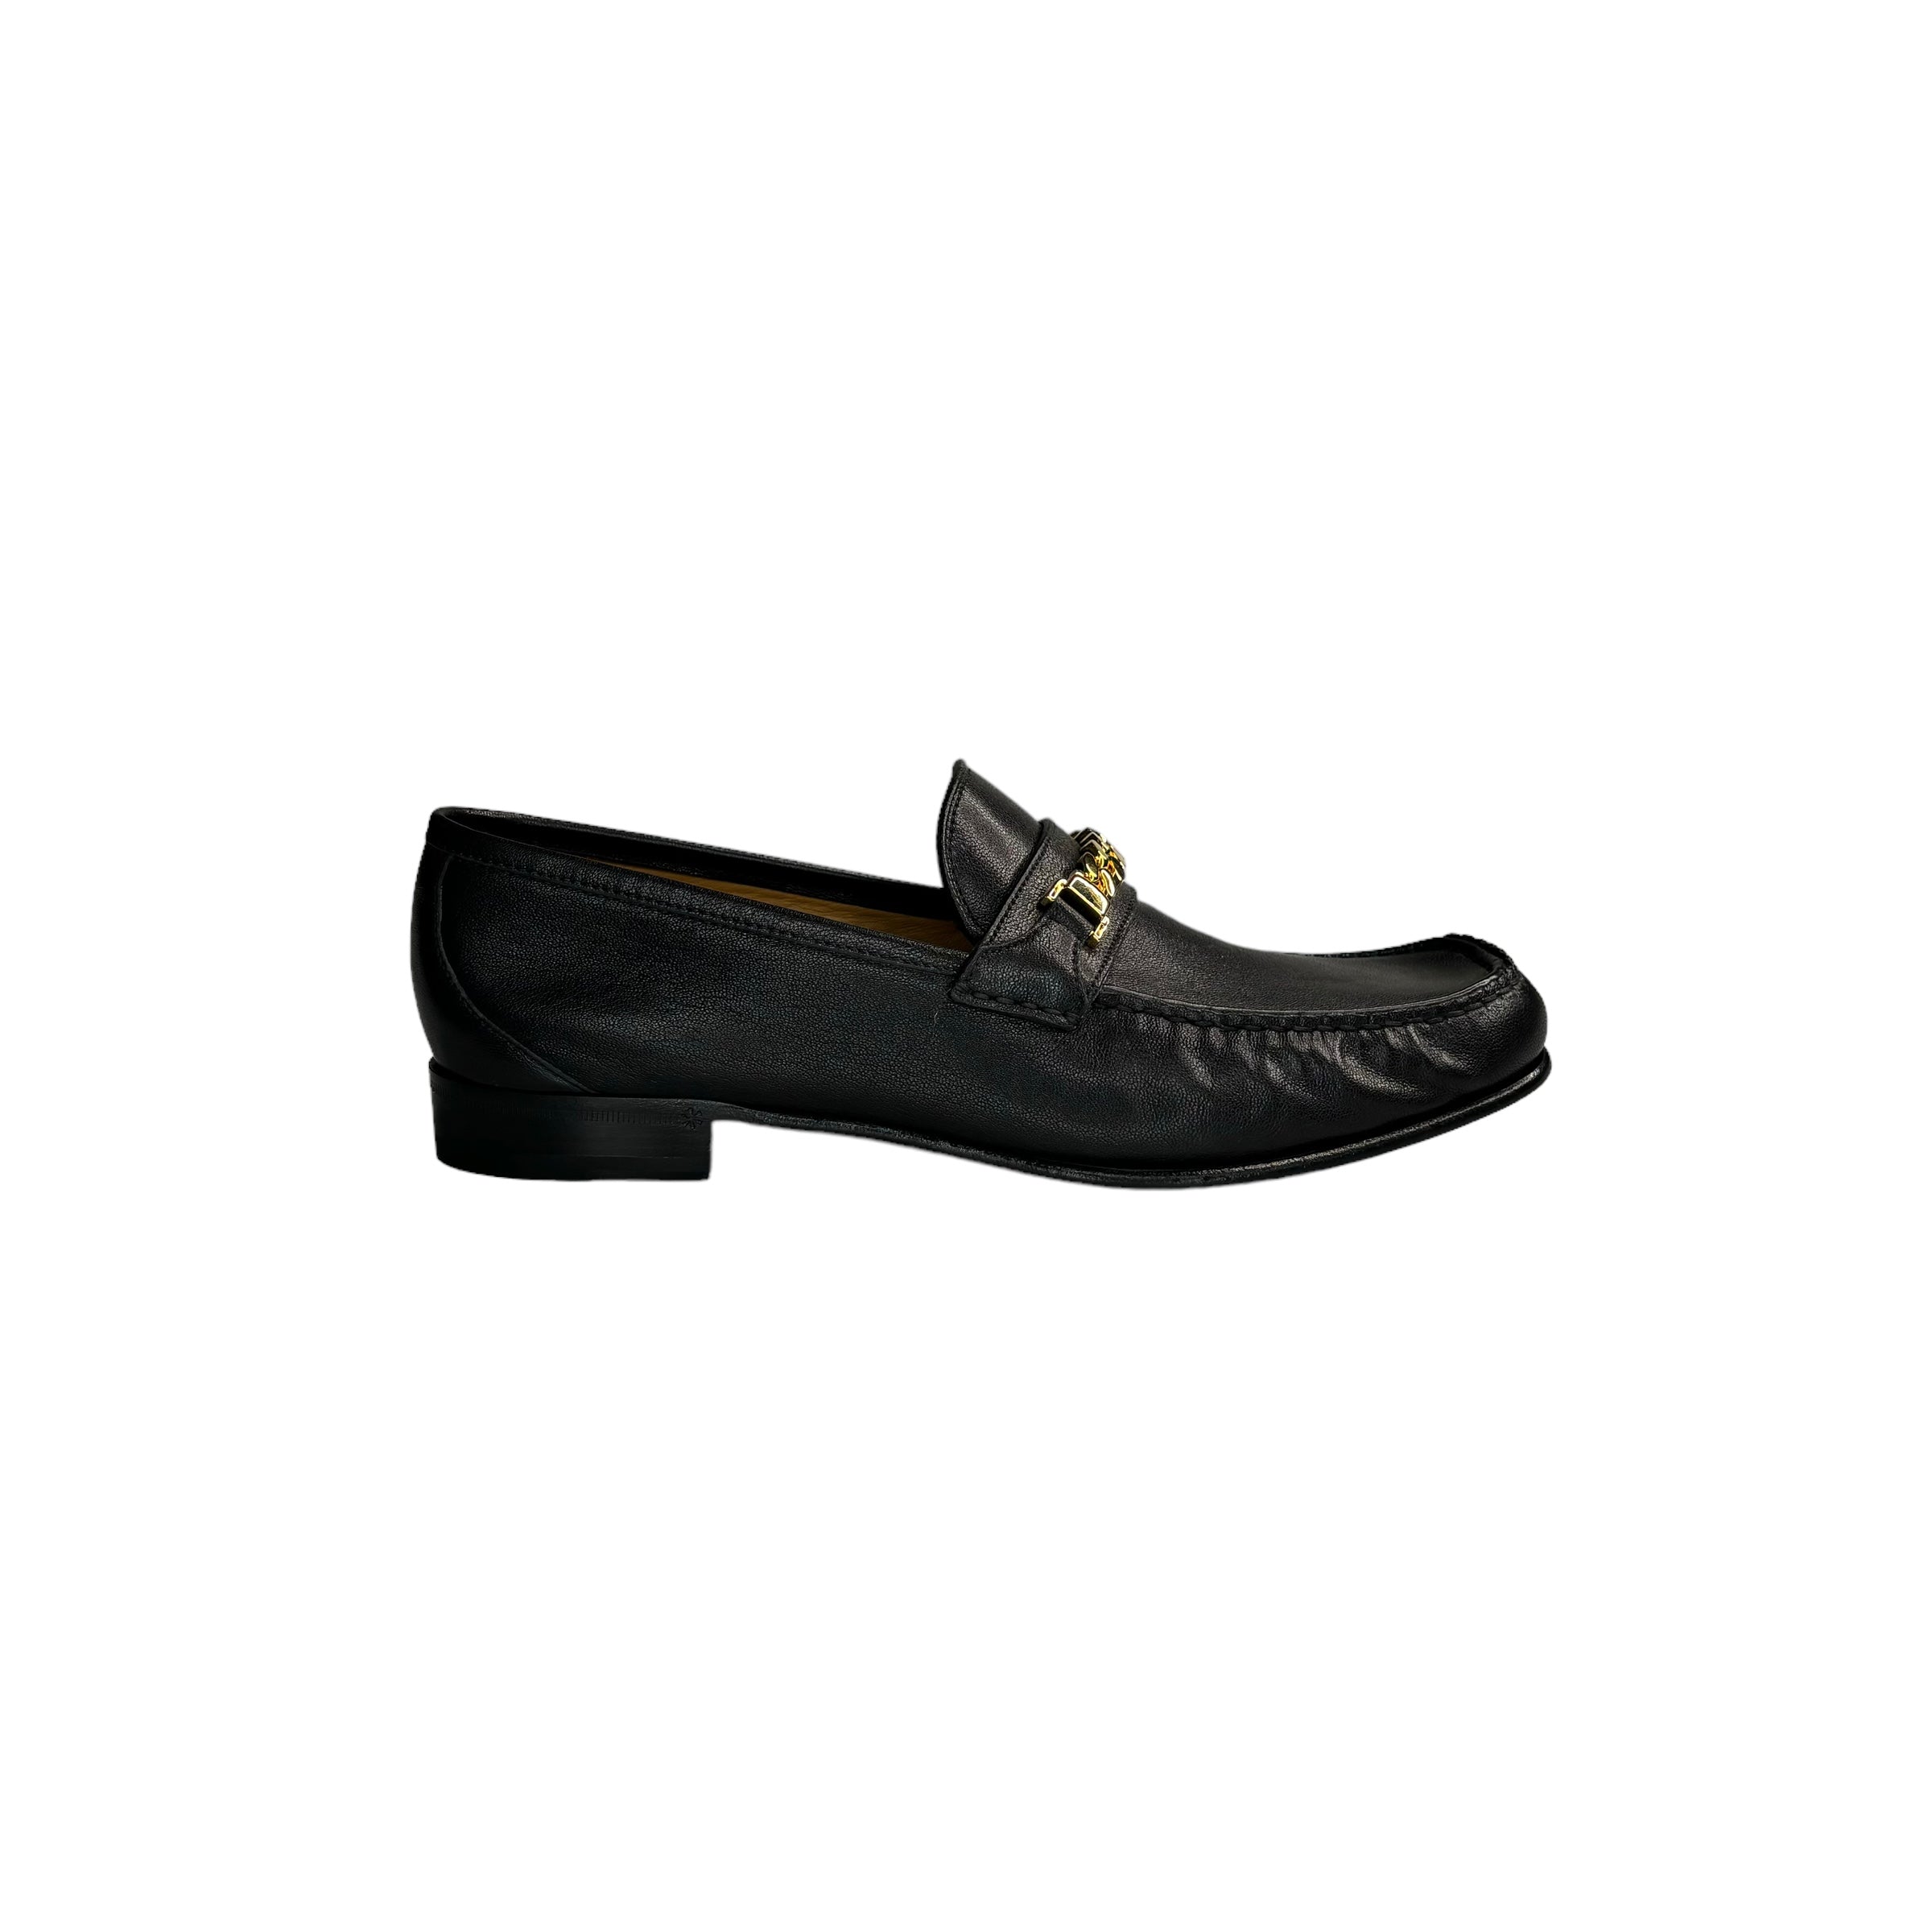 GUCCI Jaipur Leather Loafer / Black